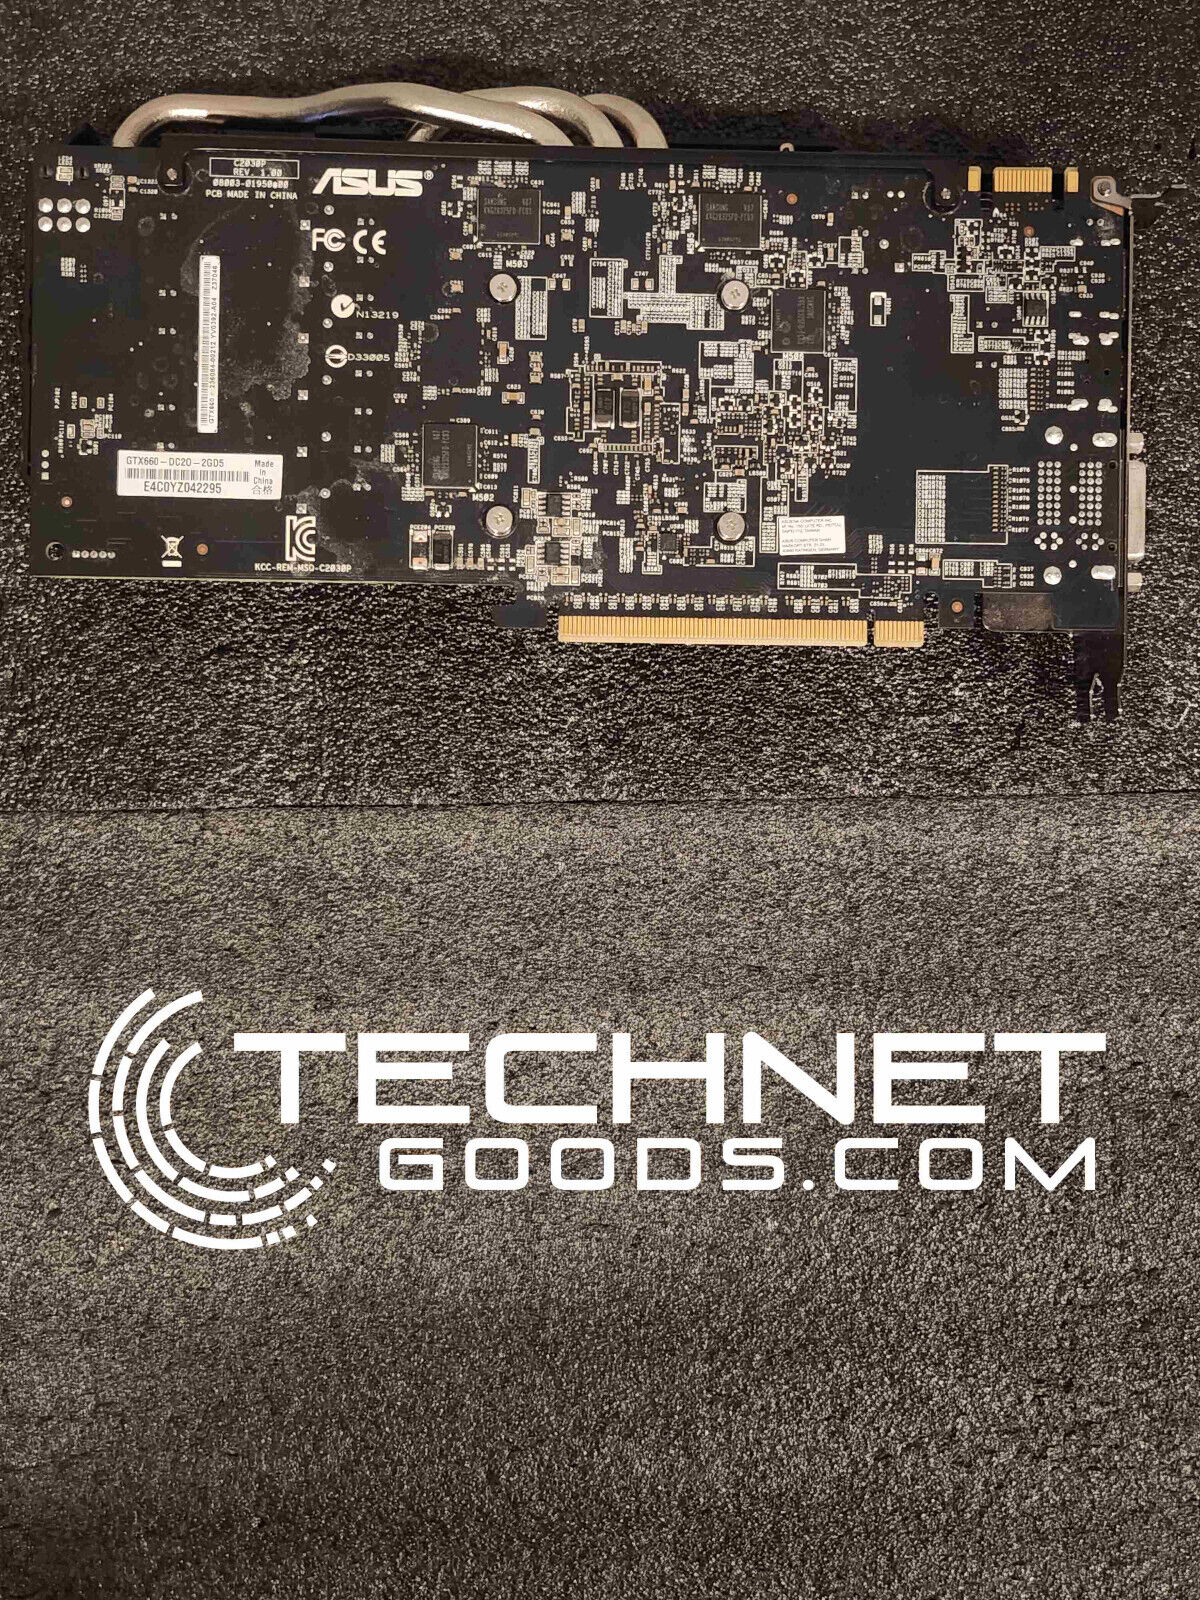 ASUS GTX 660 2GB GDDR5 - TESTED